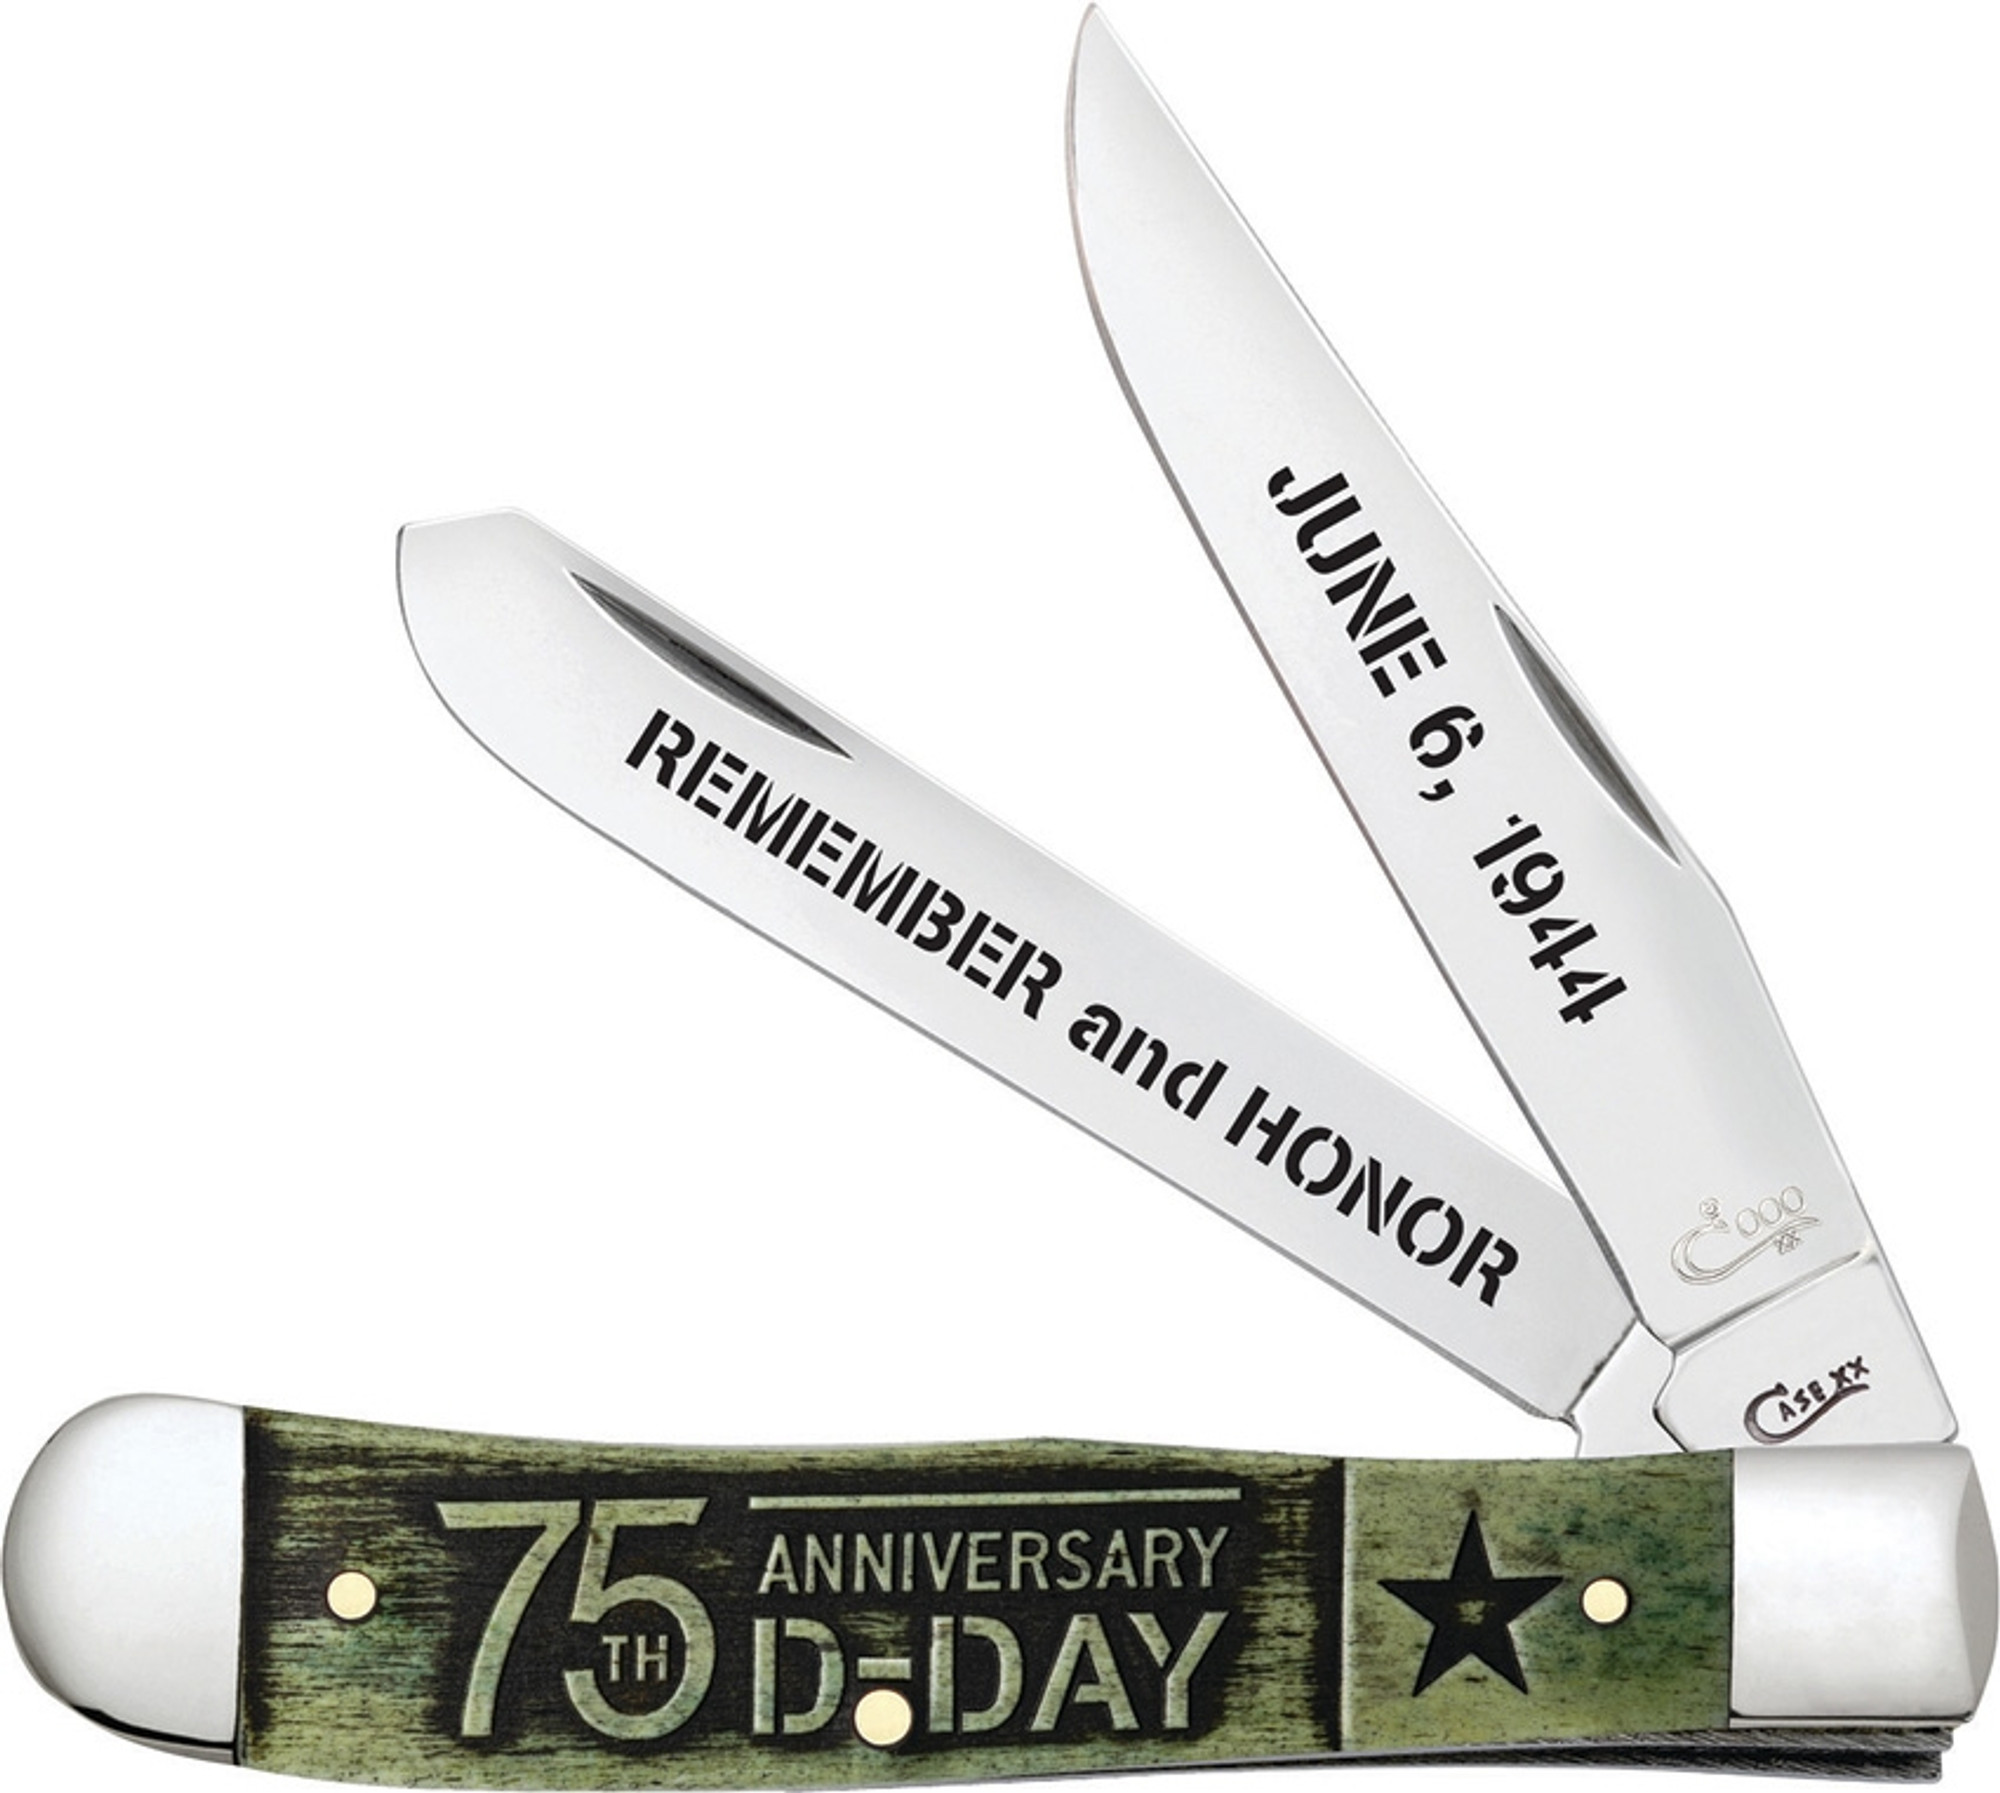 D-Day 75th Annversary Gift Set